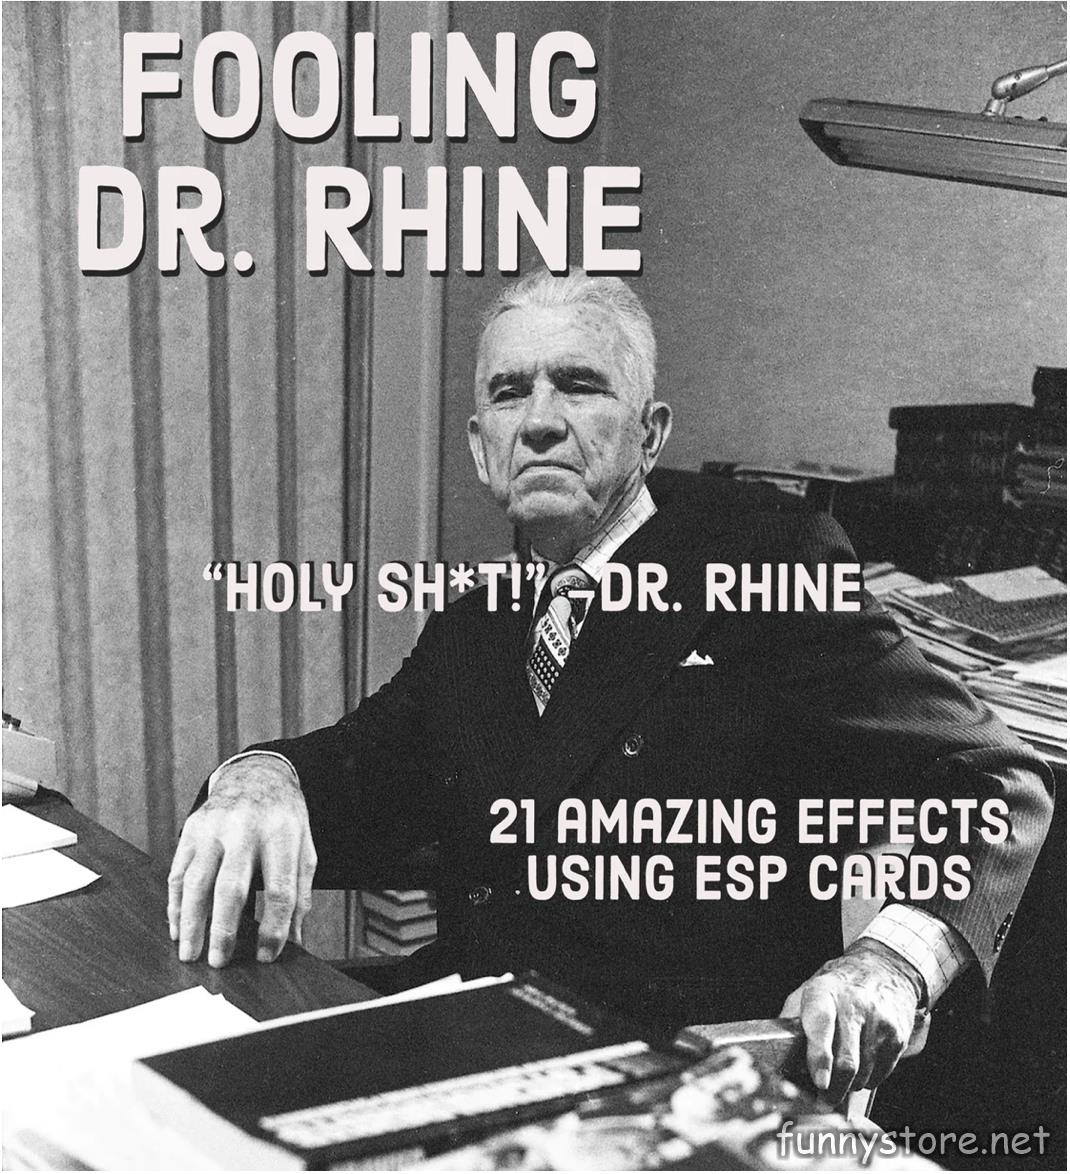 e-Mentalism - Fooling Dr. Rhine